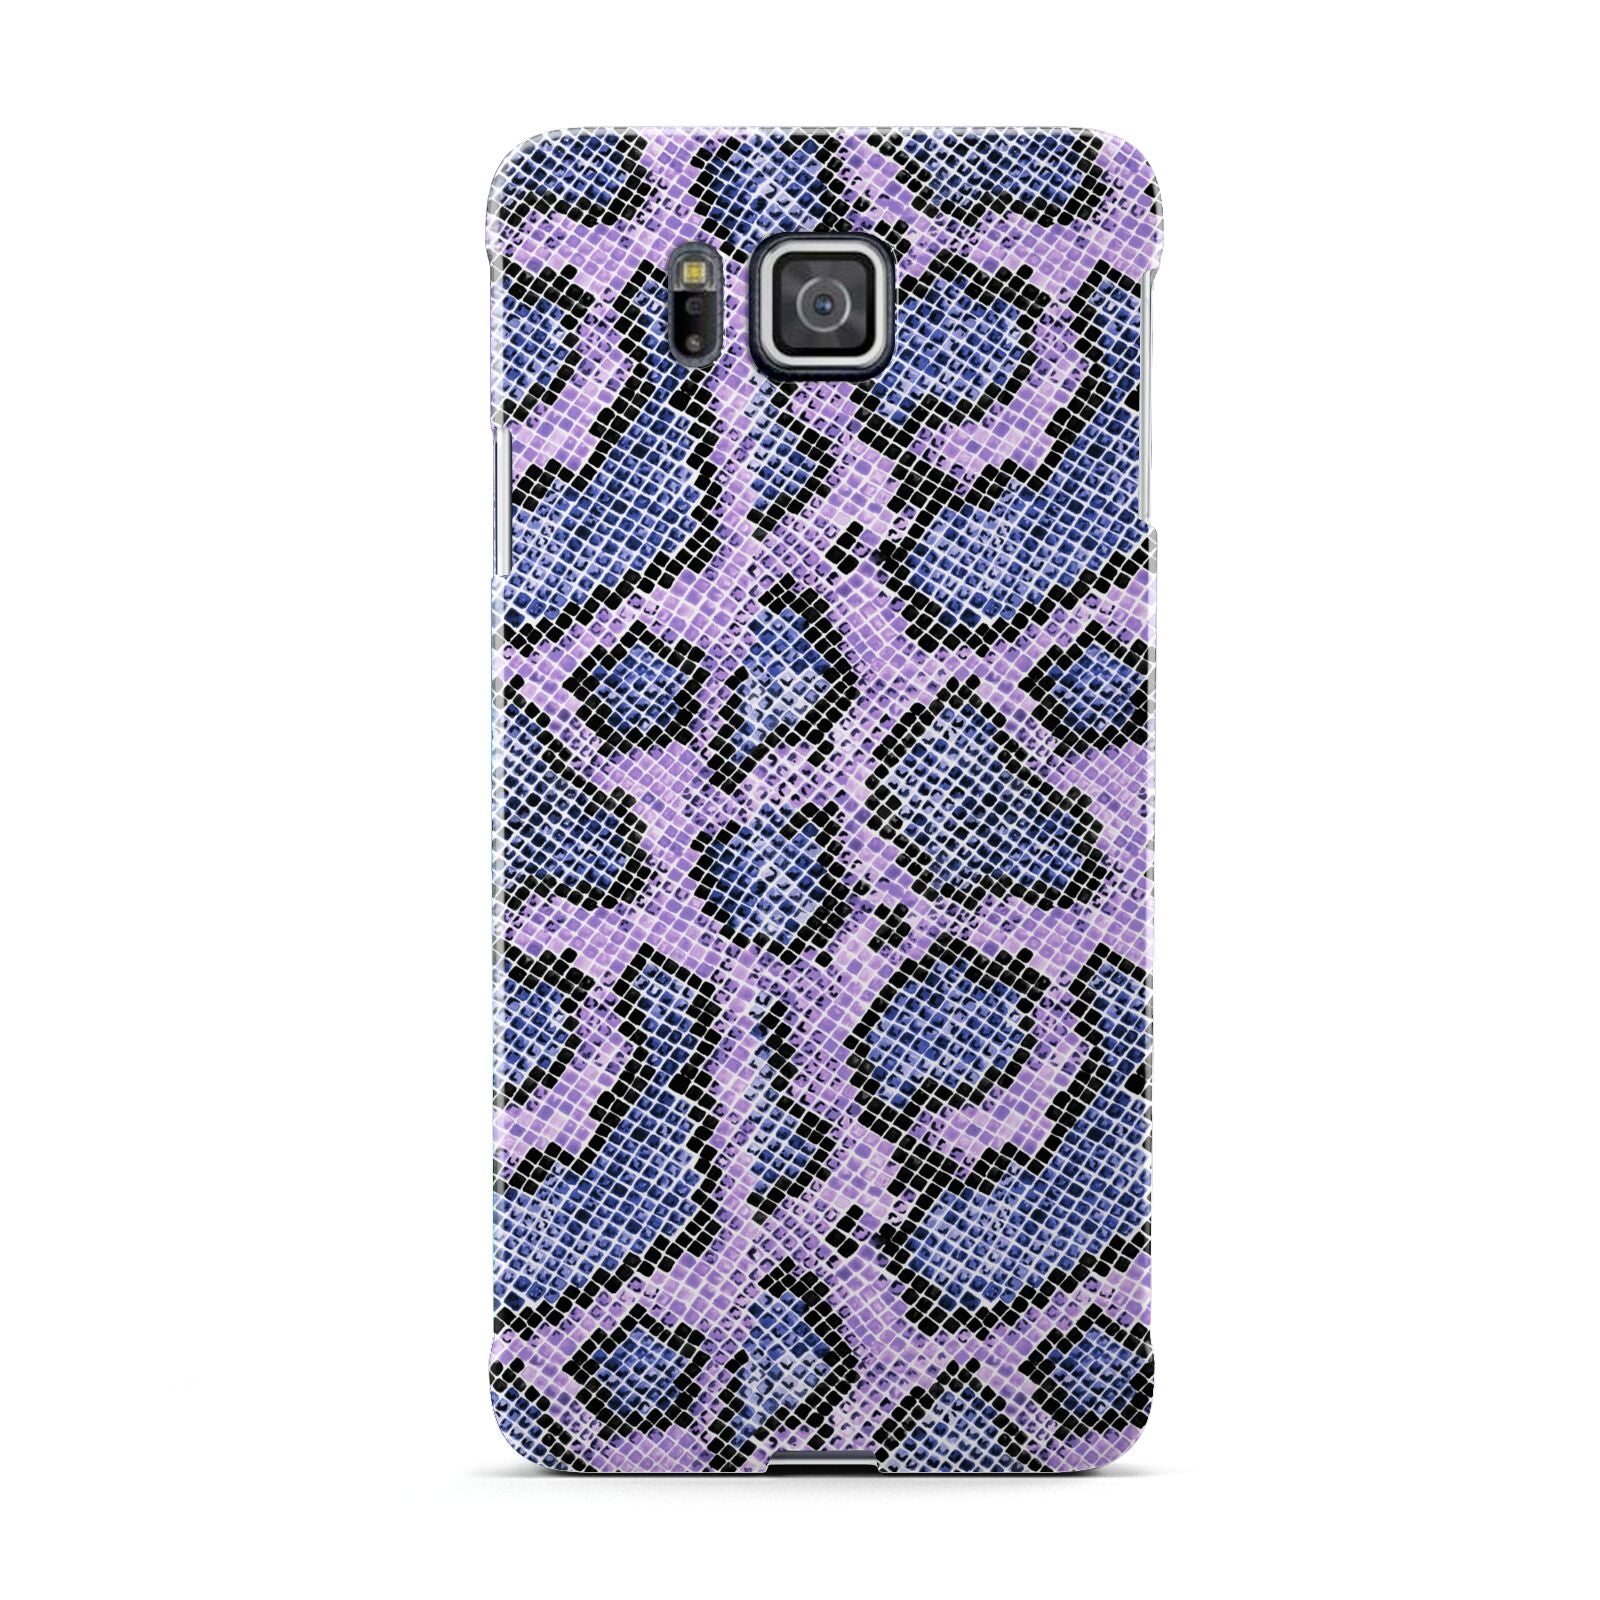 Purple And Blue Snakeskin Samsung Galaxy Alpha Case